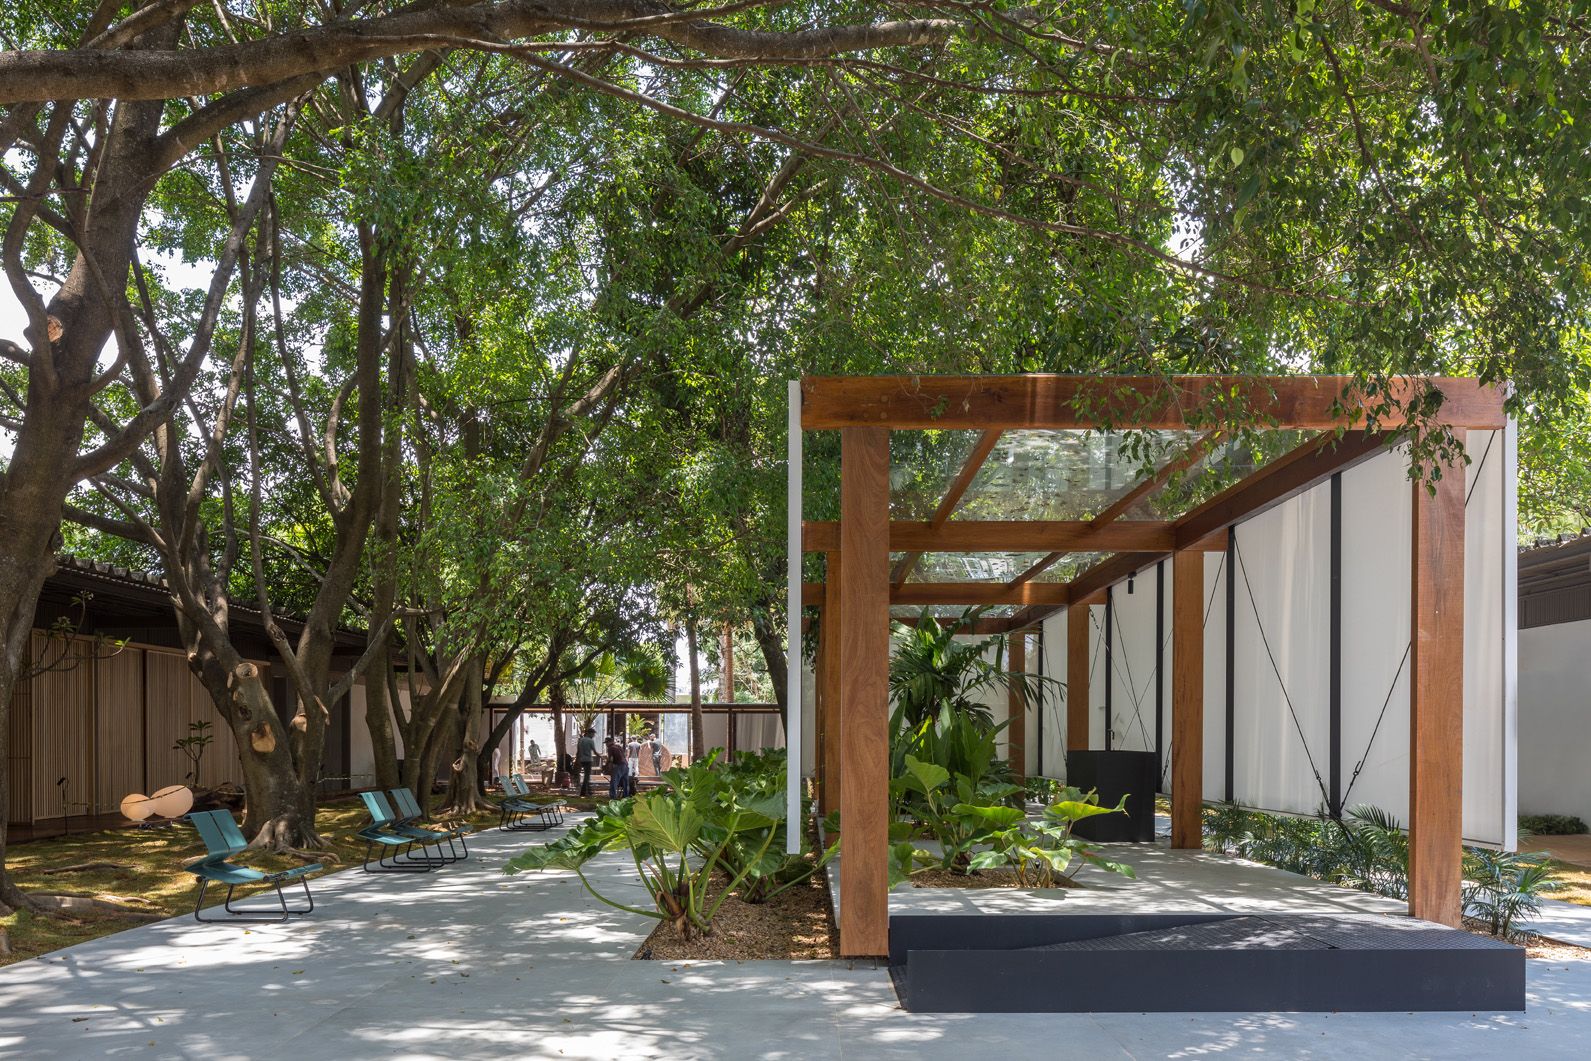 Studio Pippa - Botânico. Projeto da CASACOR Brasília 2021.